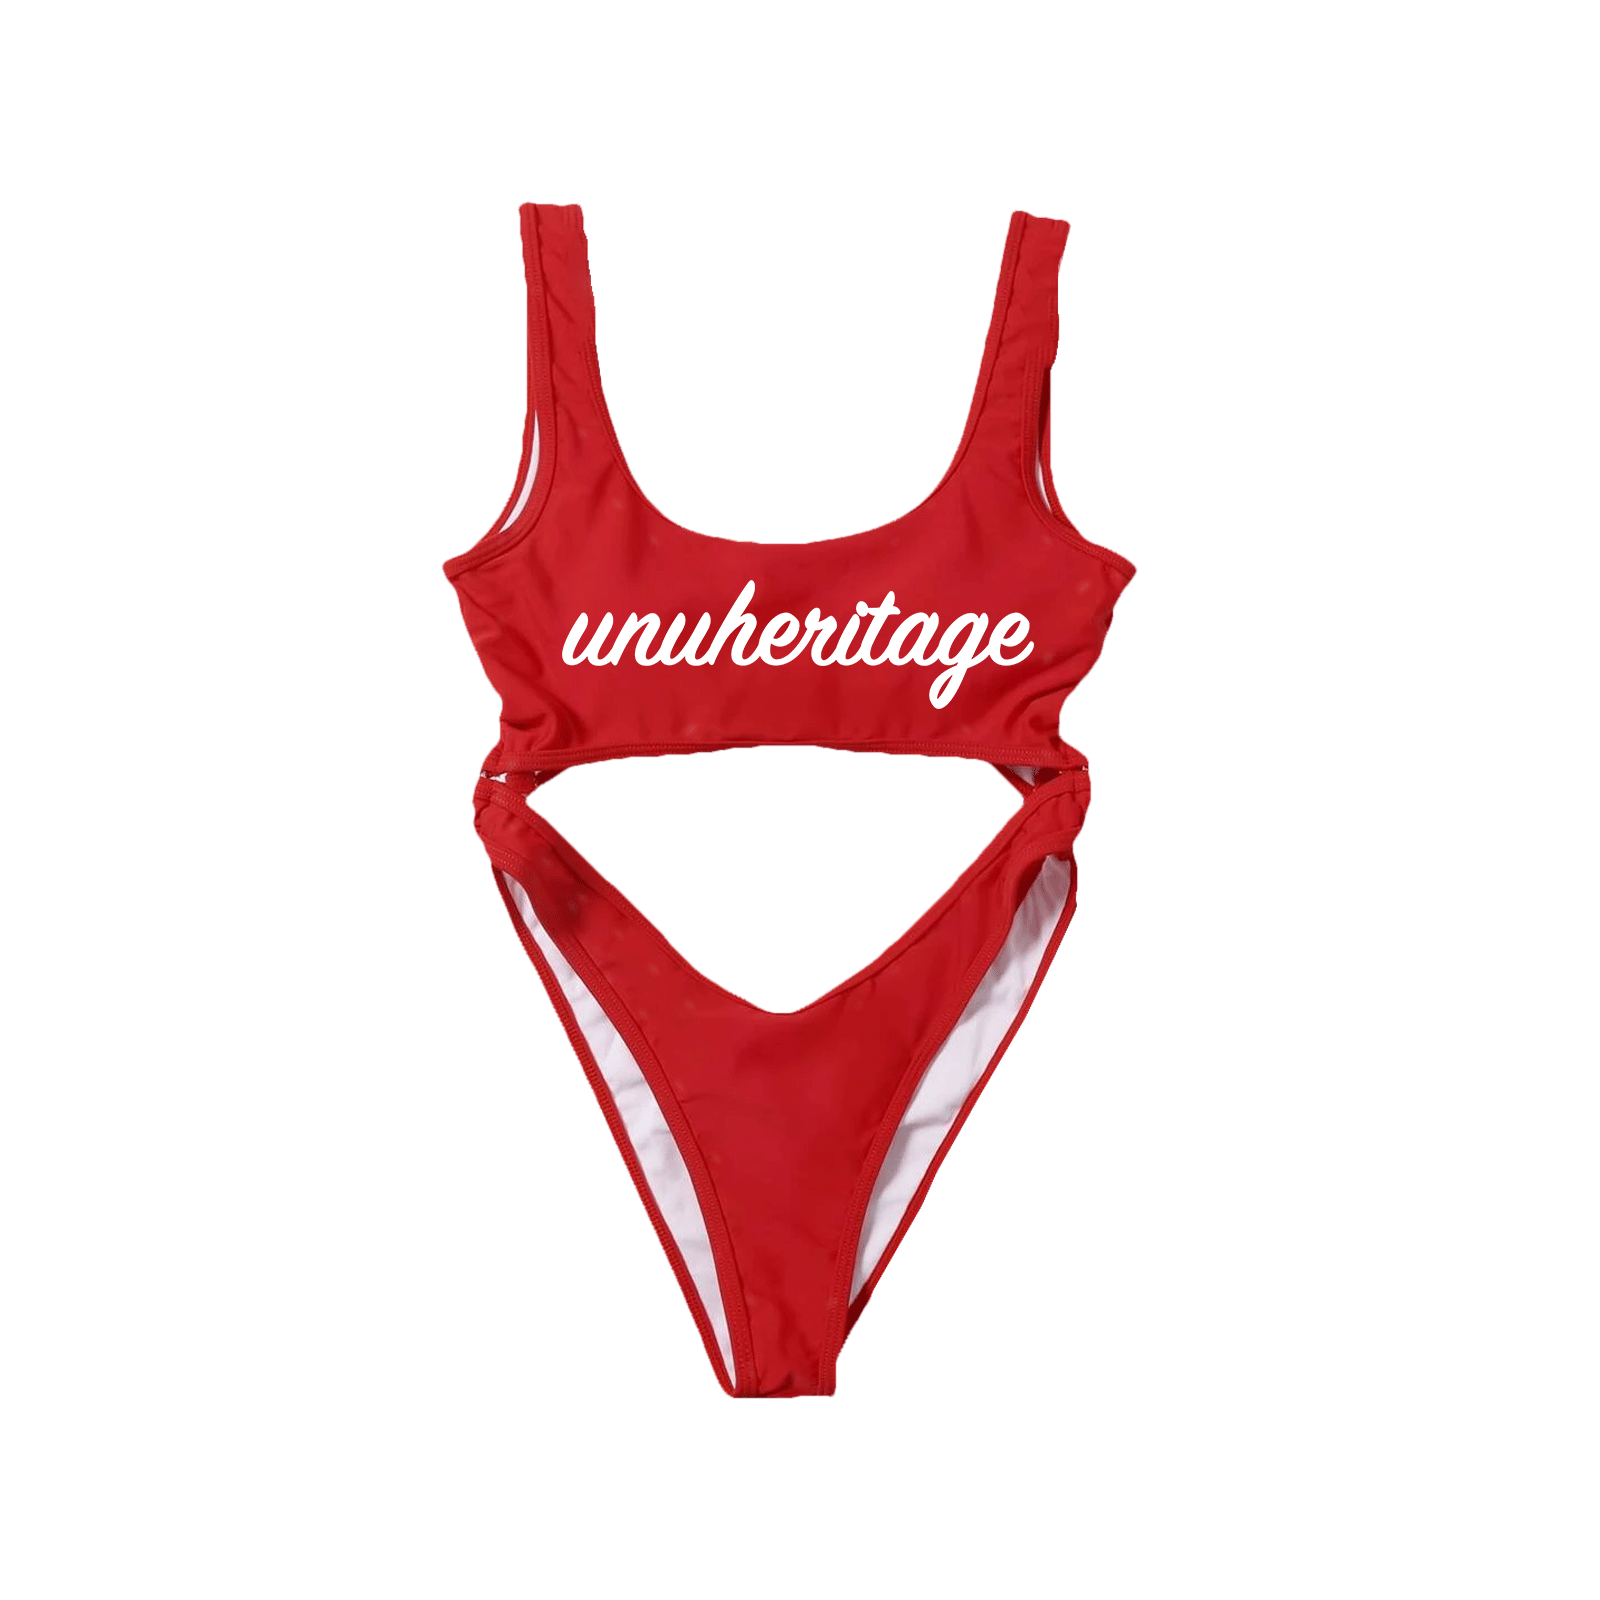 Unuheritage Ring Linked Swimsuit - Women's